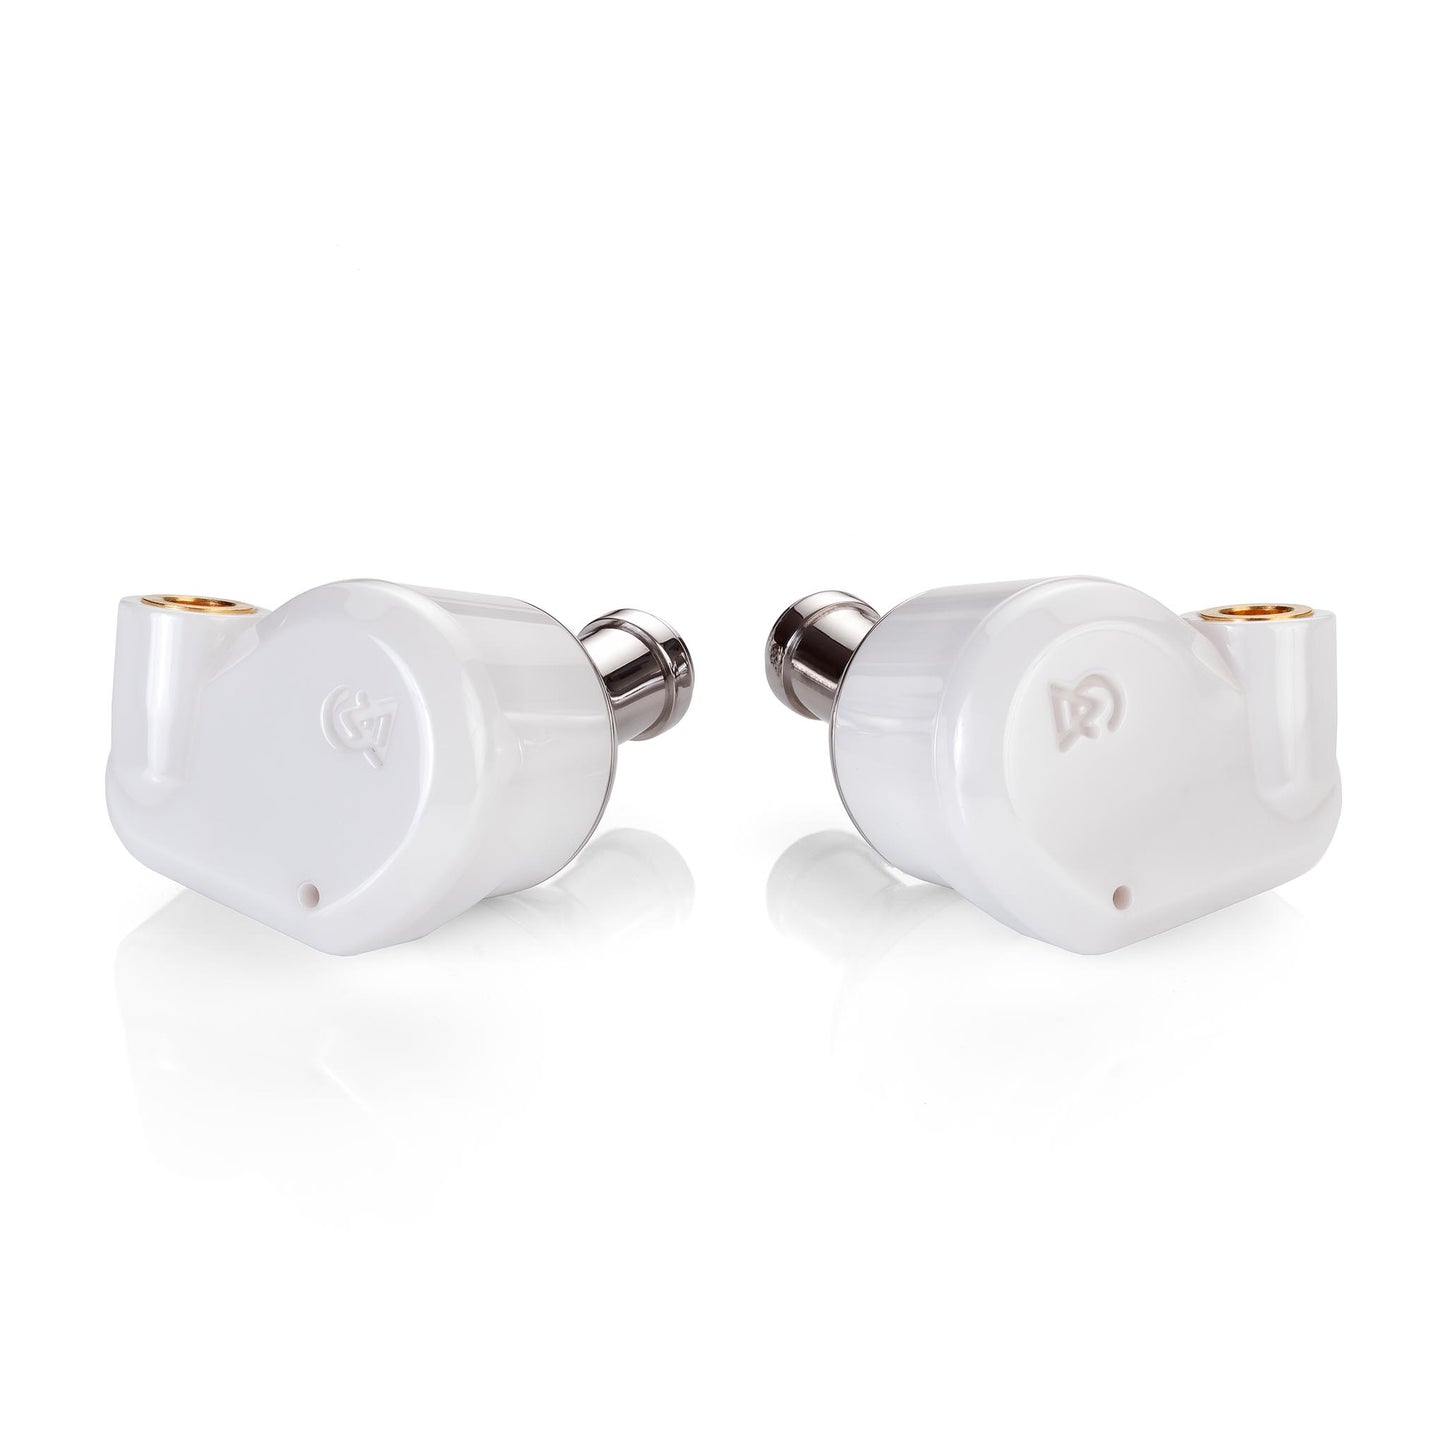 Campfire Audio Vega 2020 Dynamic In-Ear Monitors